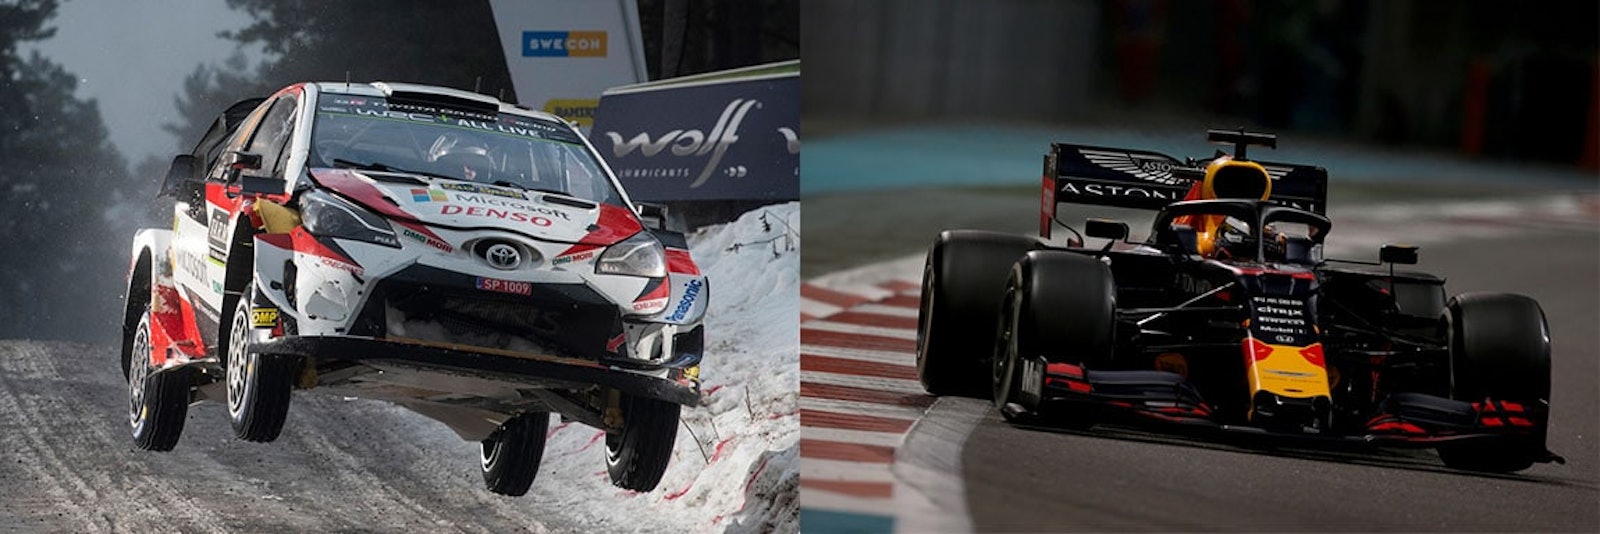 Winter rally tires vs. Formula 1 tires